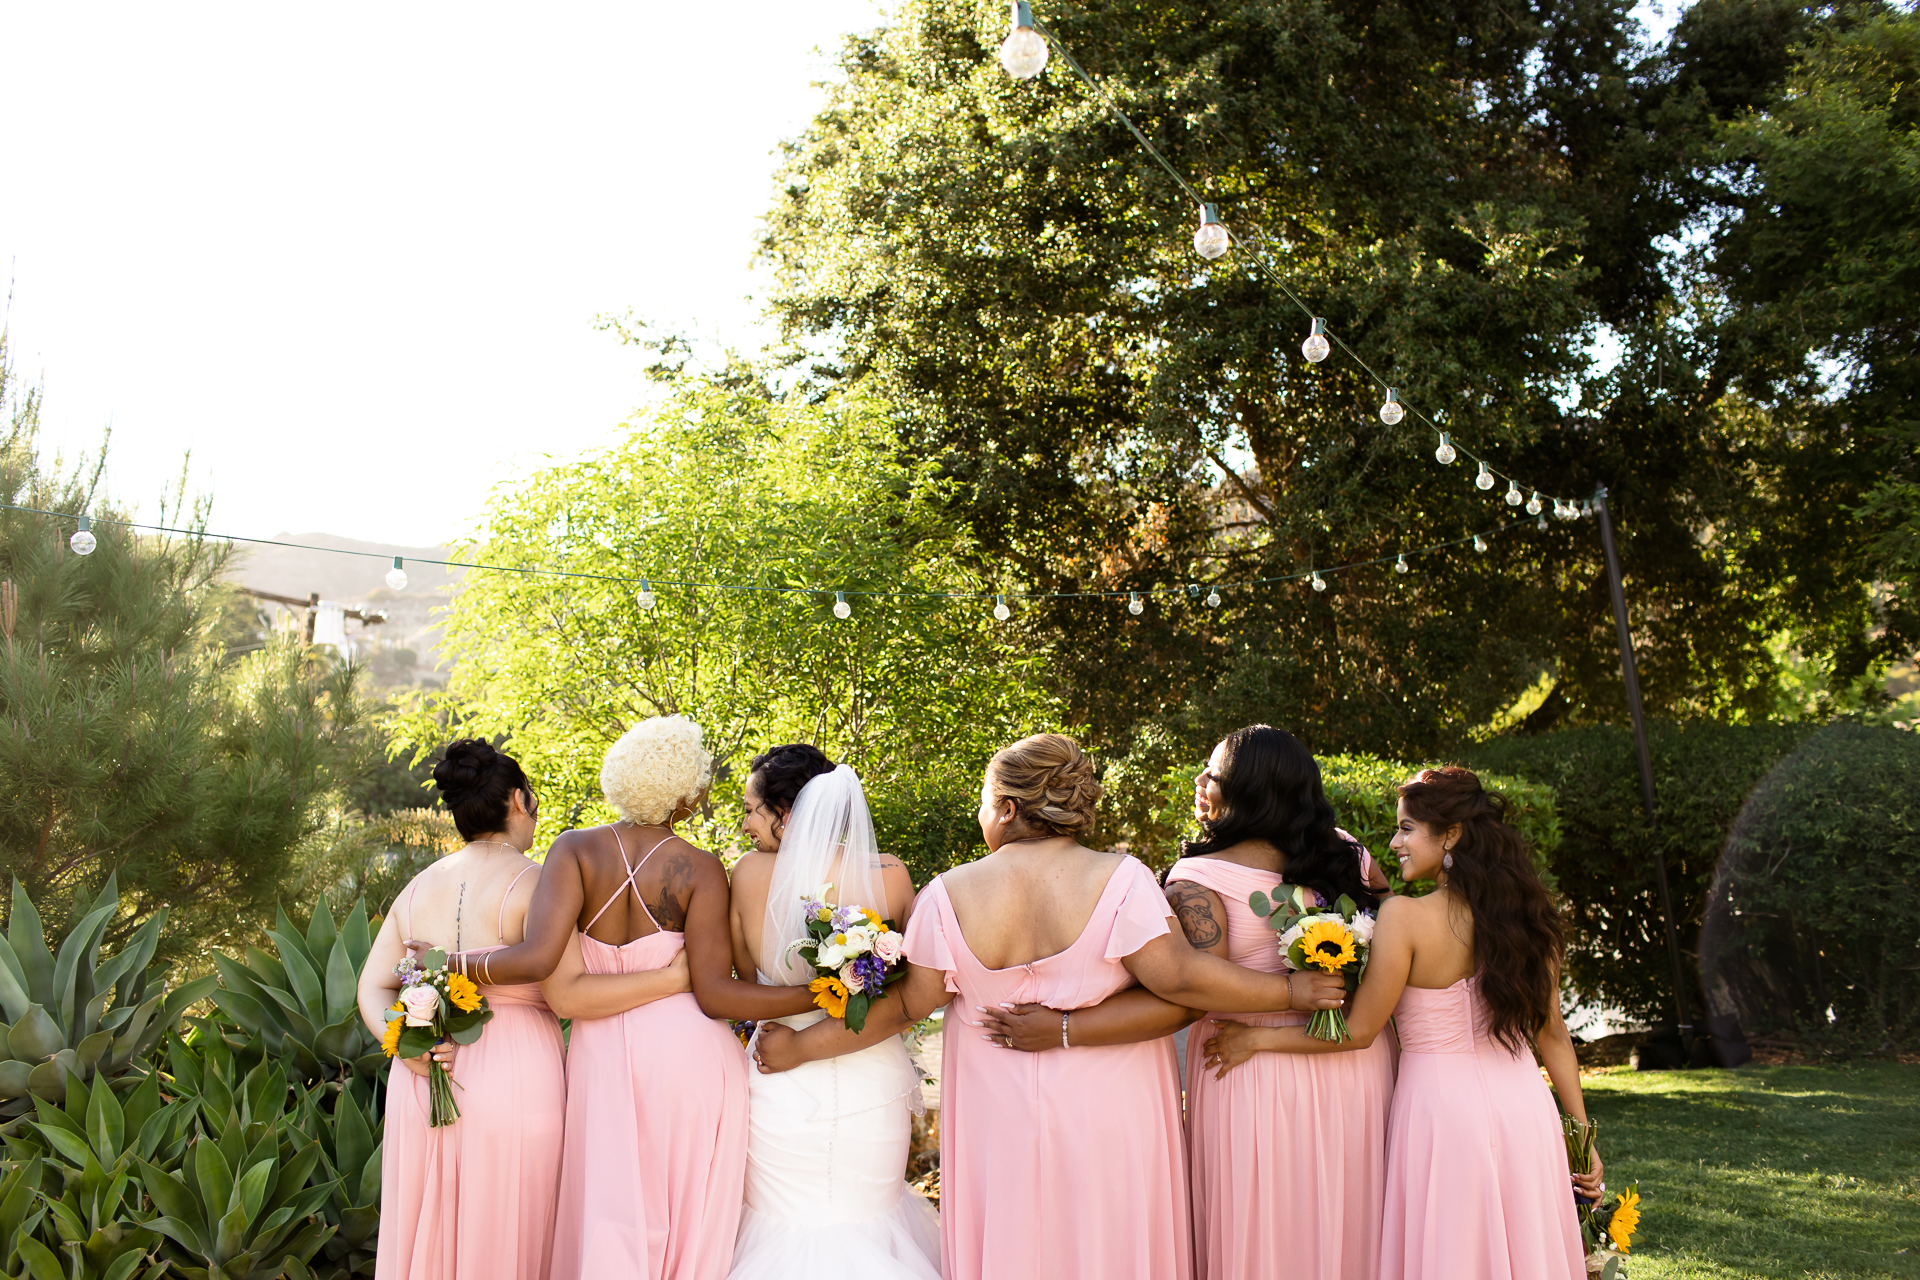 los angeles backyard wedding inspiration - bridal party photos